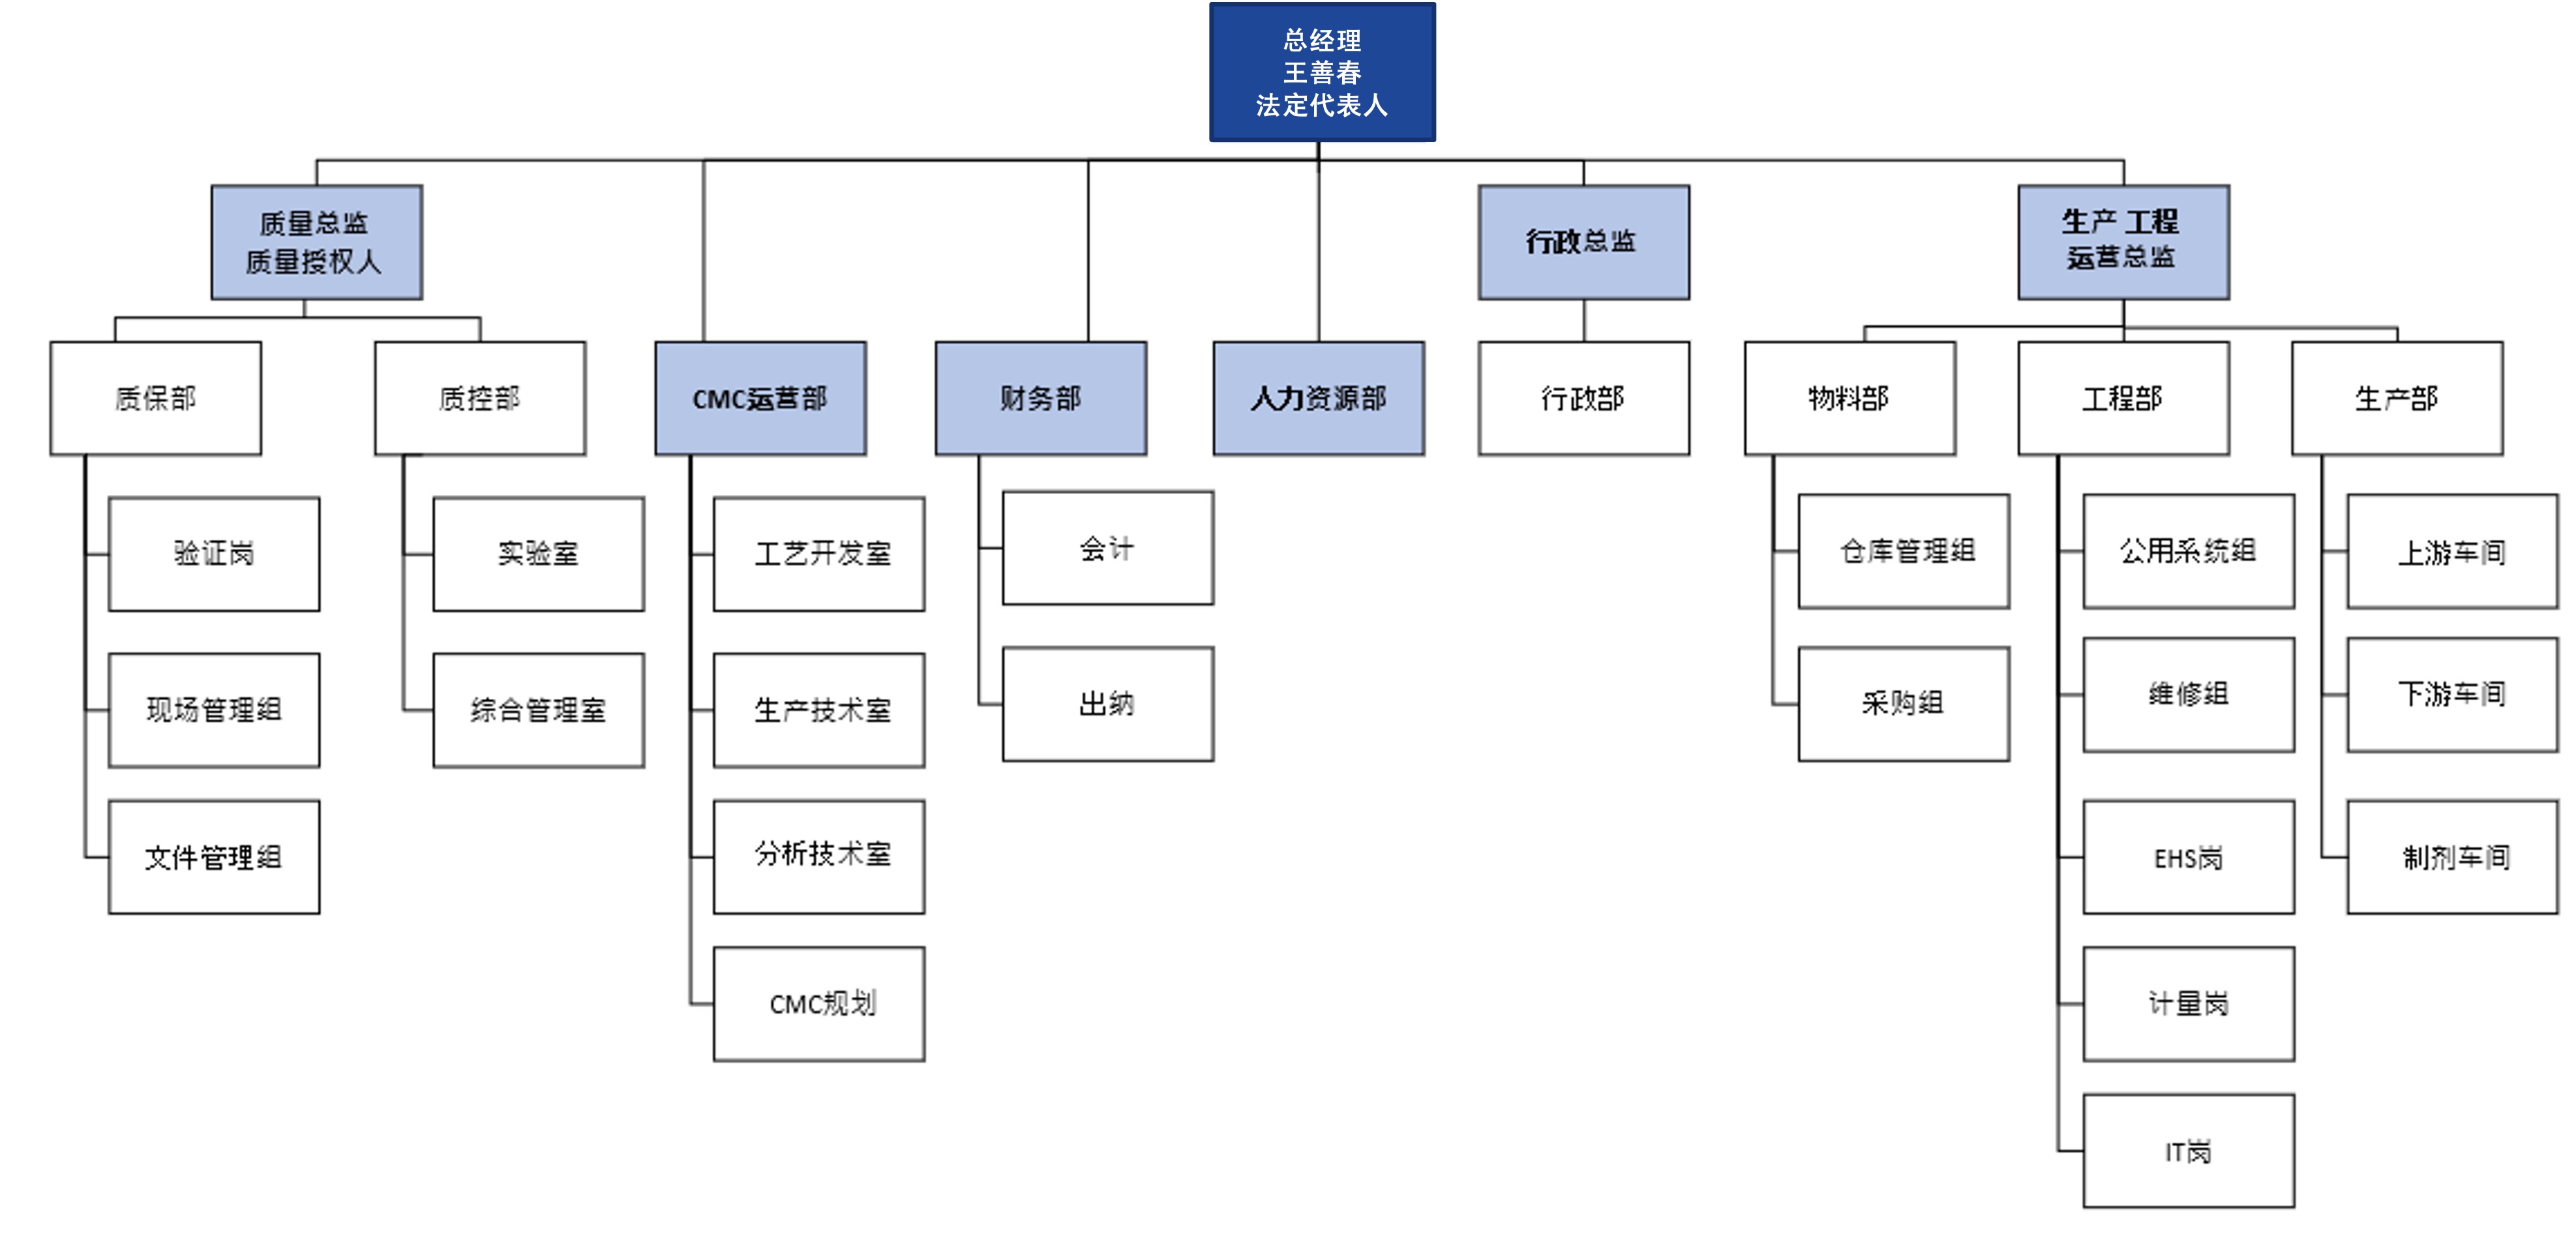 Suzhou Structure_SC_R1